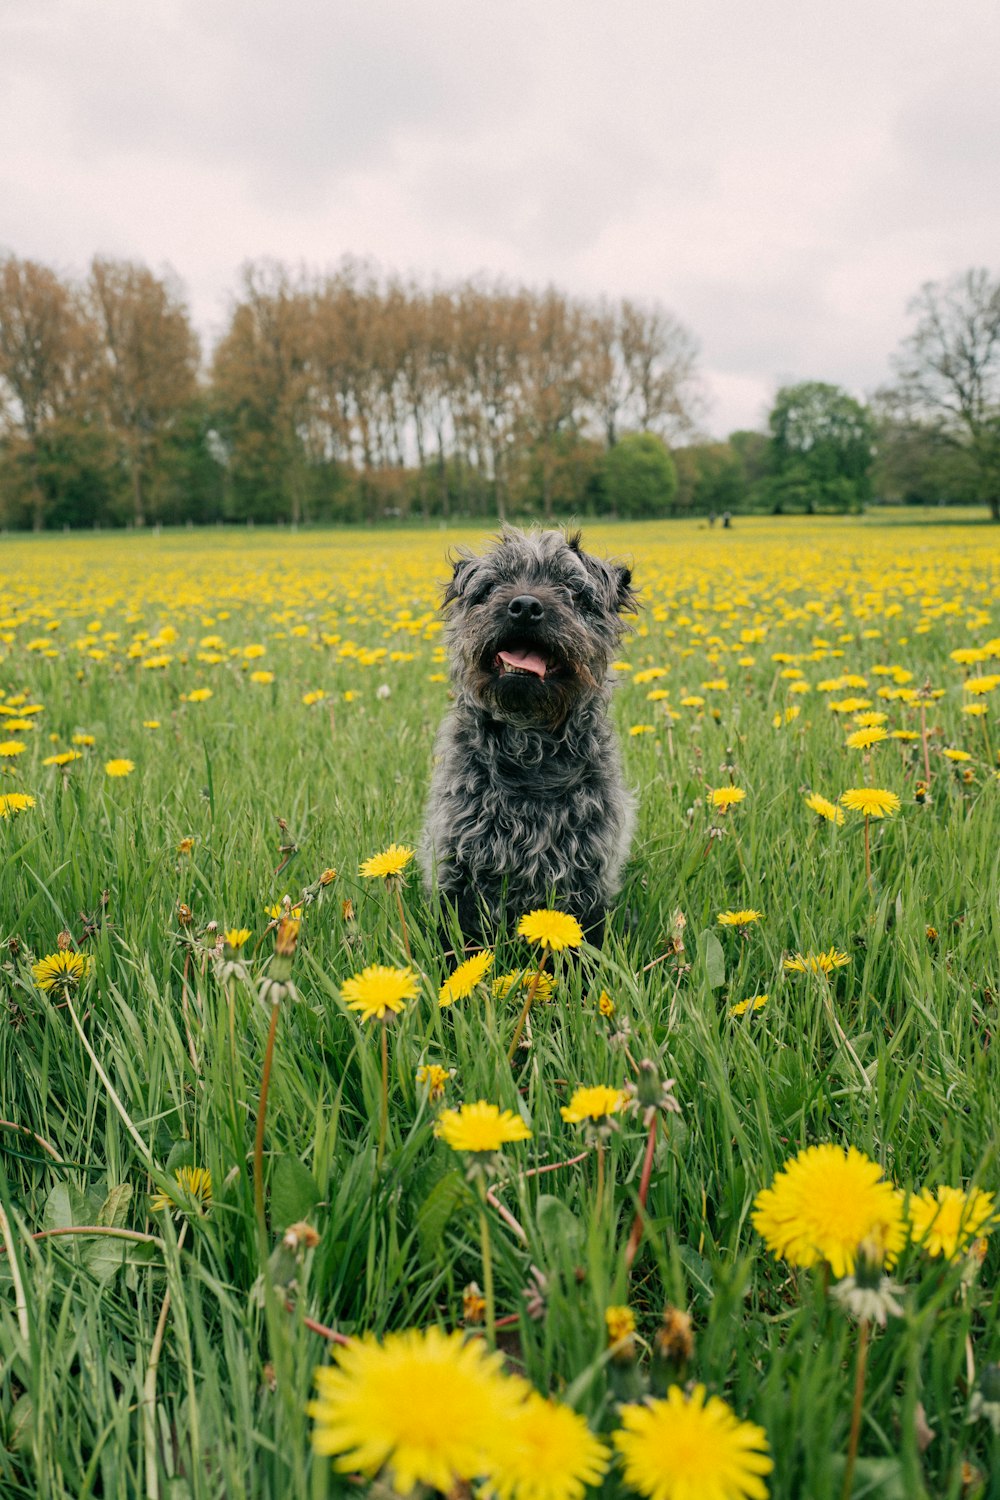 a dog is sitting in a field of dandelions